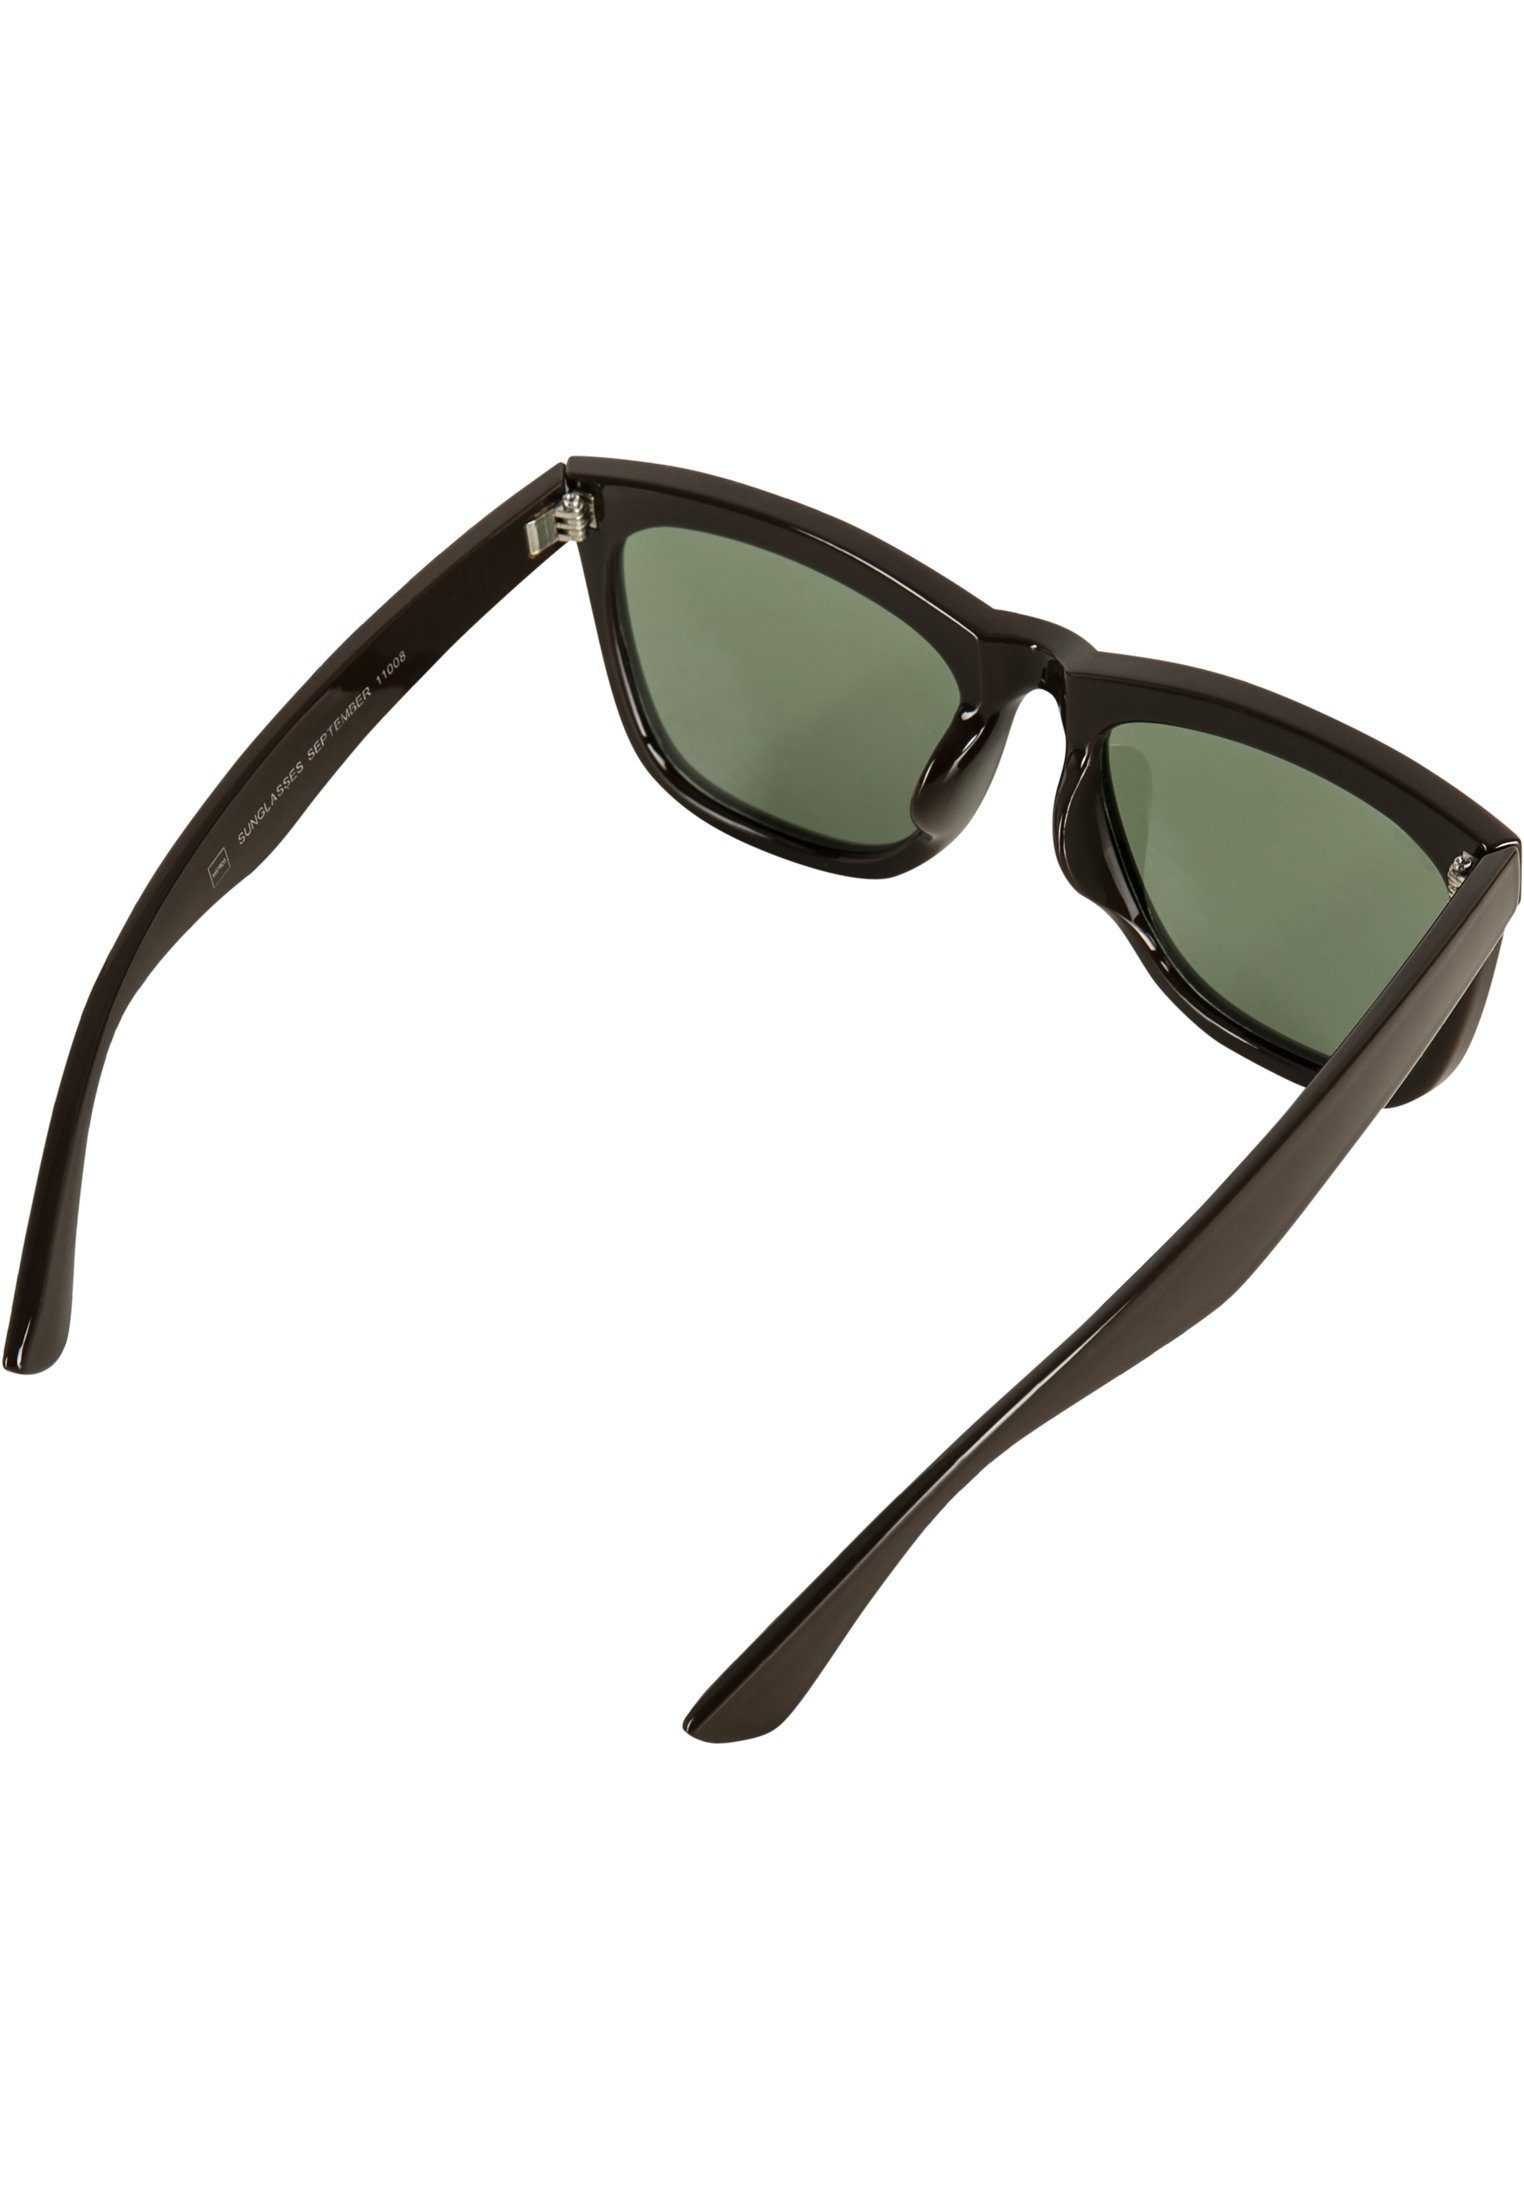 September Accessoires Sonnenbrille brown/green MSTRDS Sunglasses